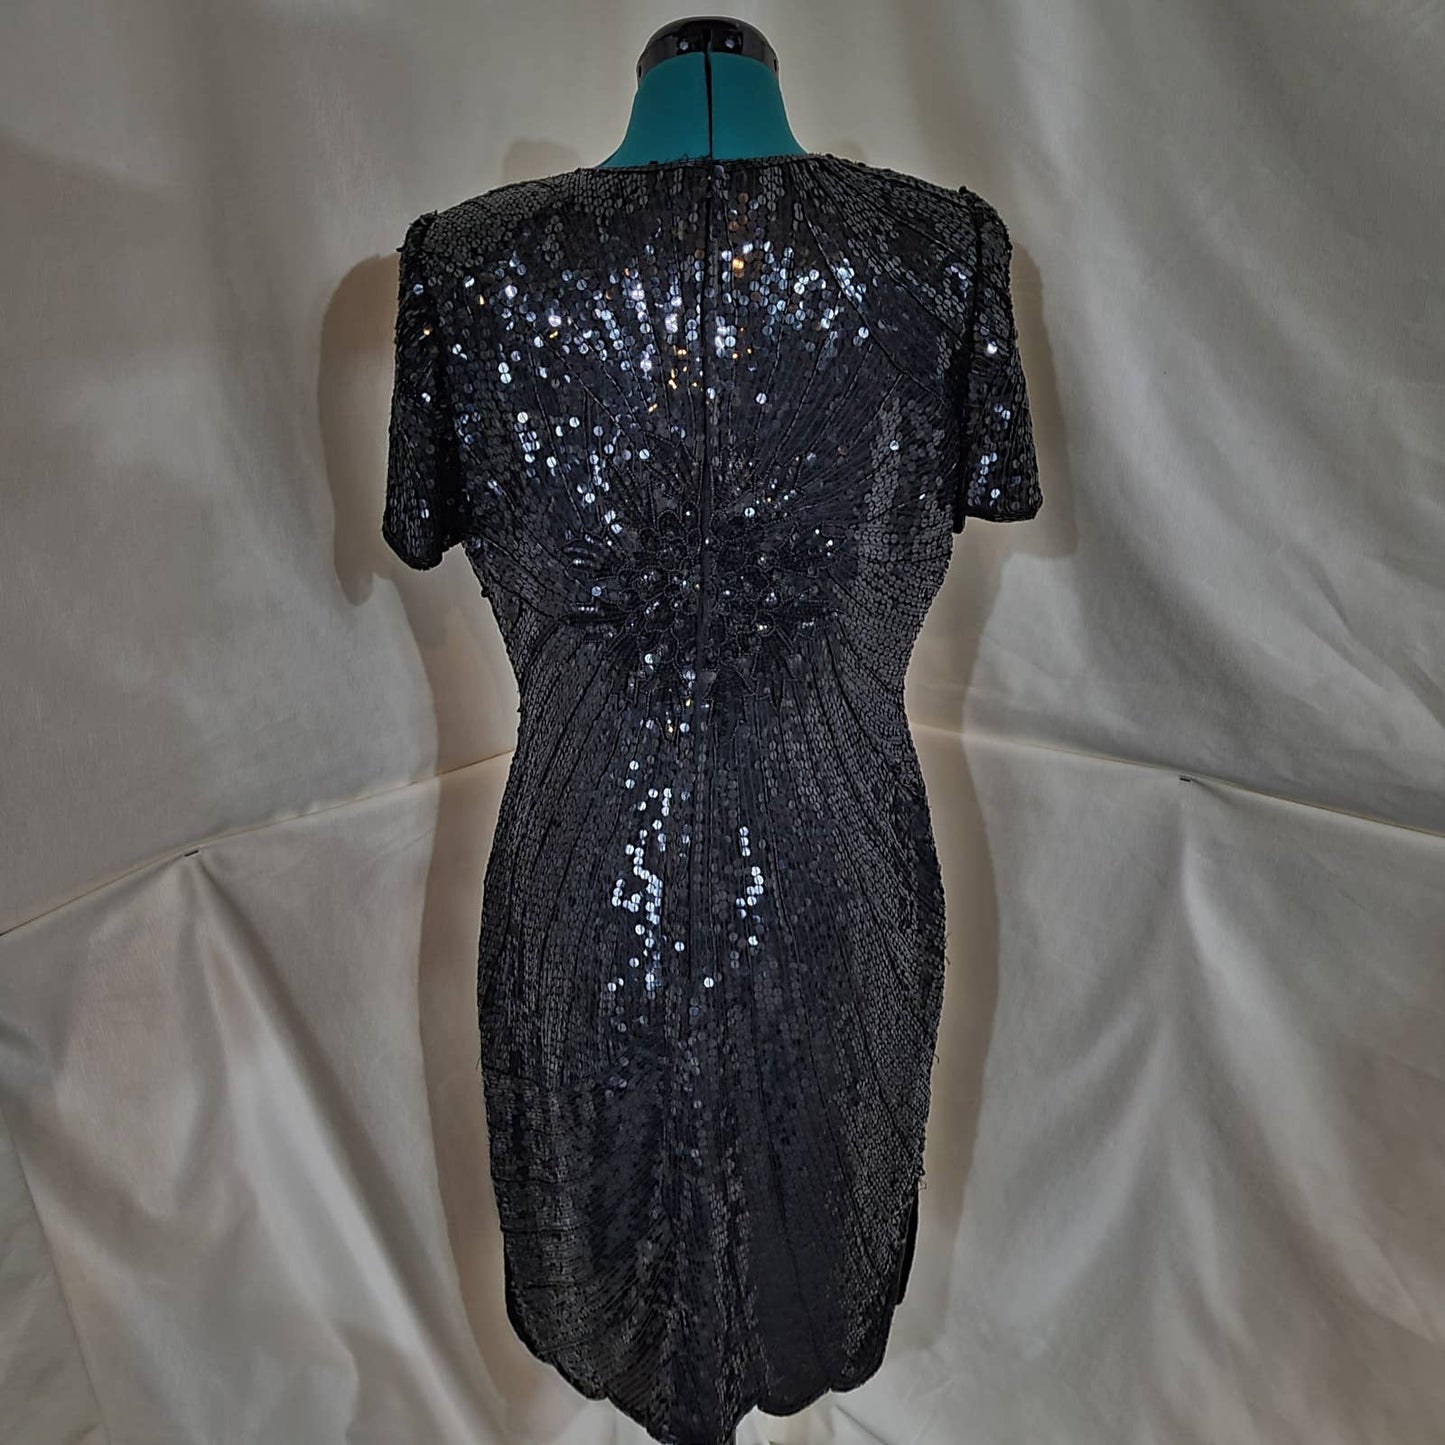 Vintage Joseph Ribkoff 1980s Black Silk and Sequin Cocktail Prom Dress - SmallMarkita's ClosetJoseph Ribkoff